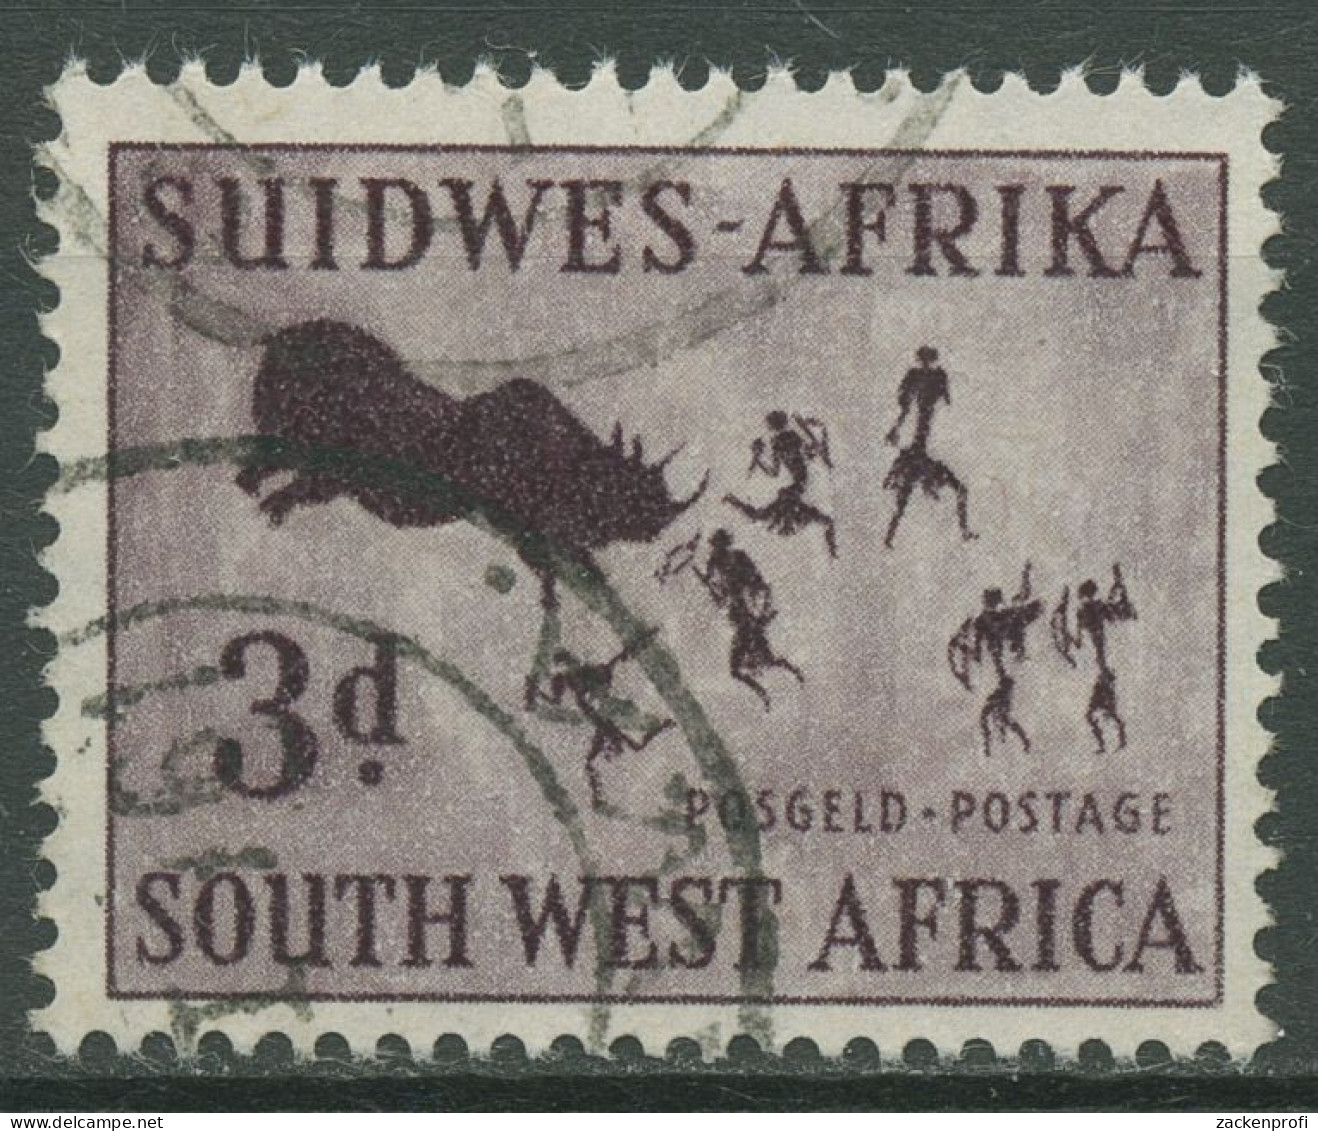 Südwestafrika 1960 Felszeichnung Nashornjagd 293 Gestempelt - Afrique Du Sud-Ouest (1923-1990)